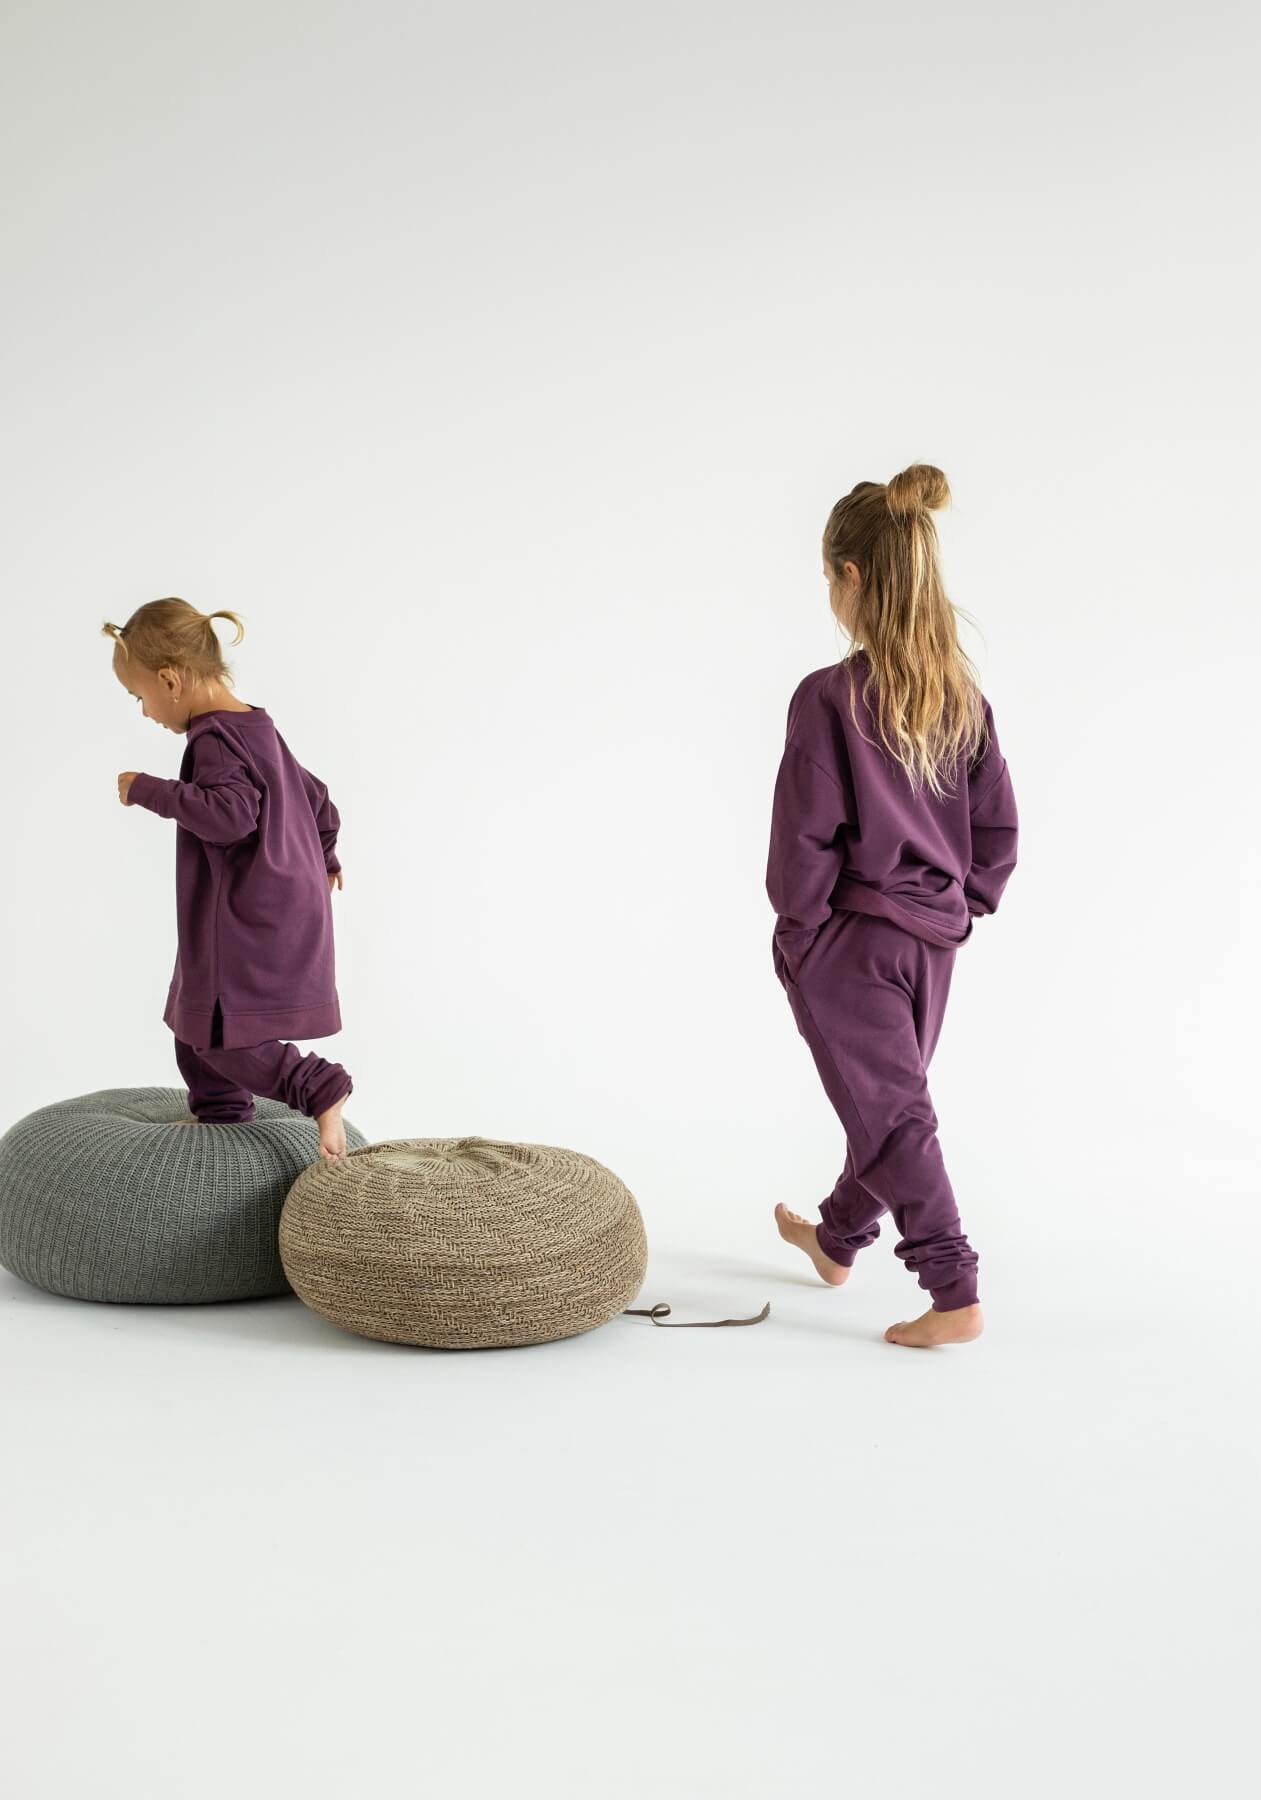 Children's Sweatshirt organic cotton Purple - Oversized